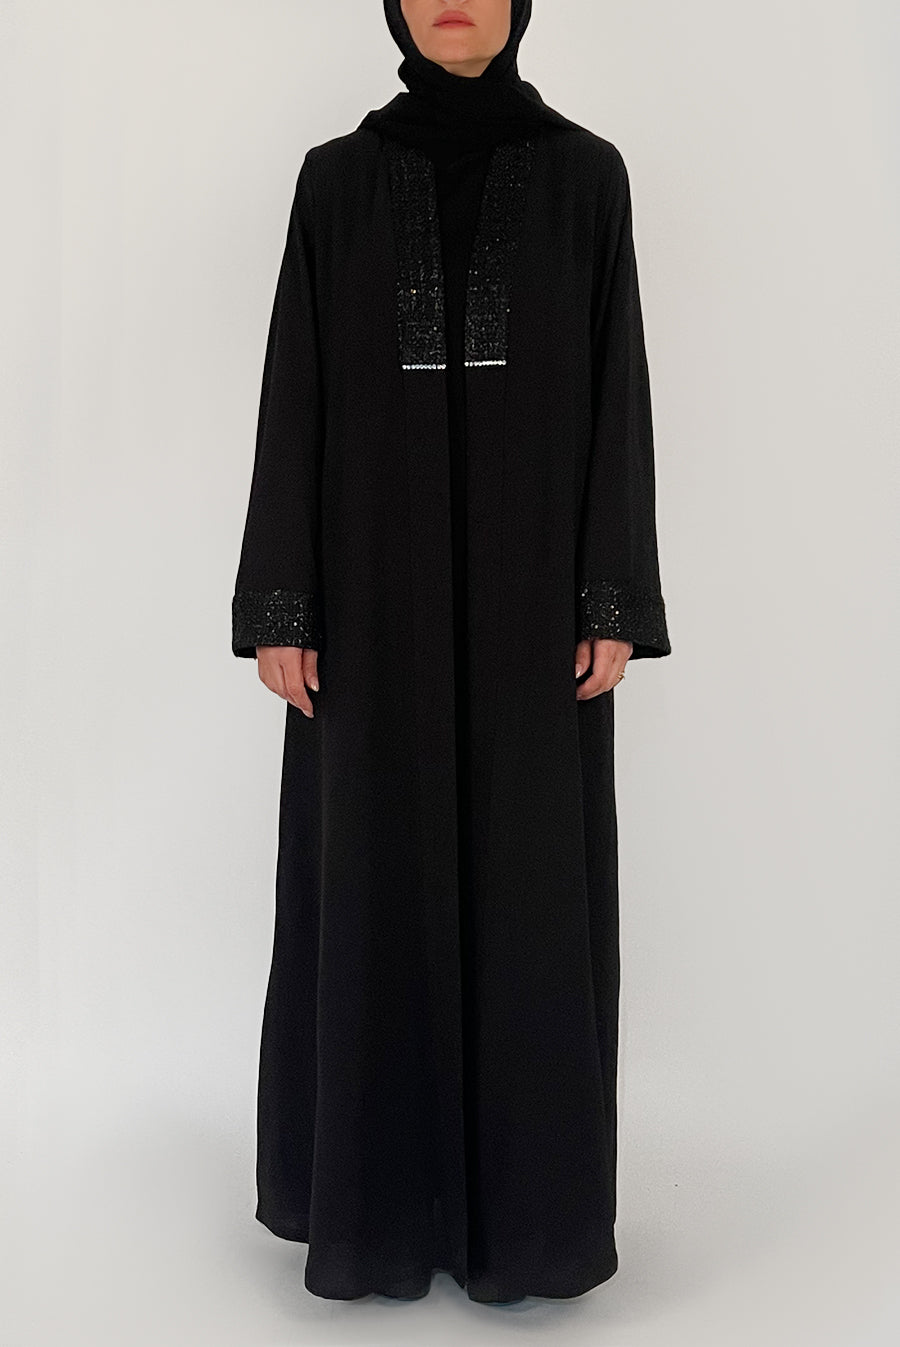 abaya online